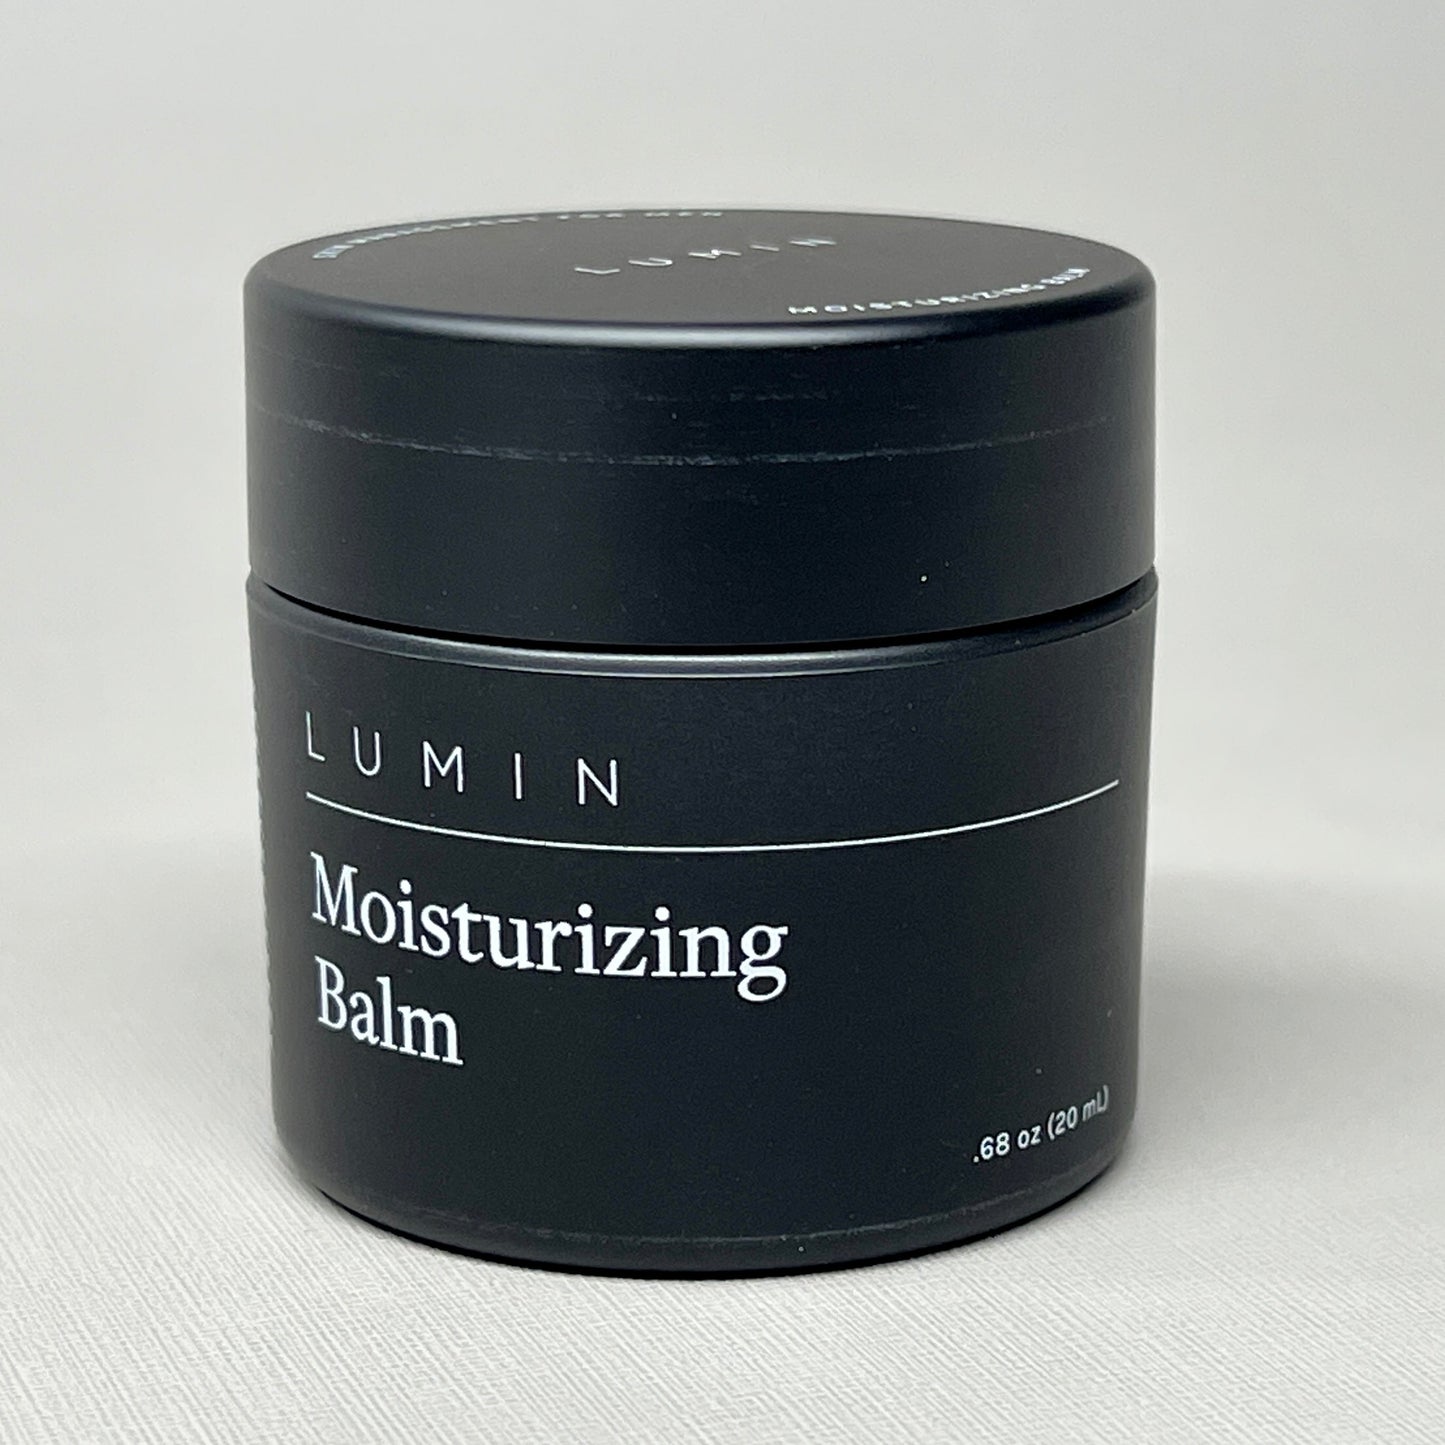 LUMIN (3-PACK) Men's Moisturizing Balm Ultra-Hydrating 0.68 oz 20ml